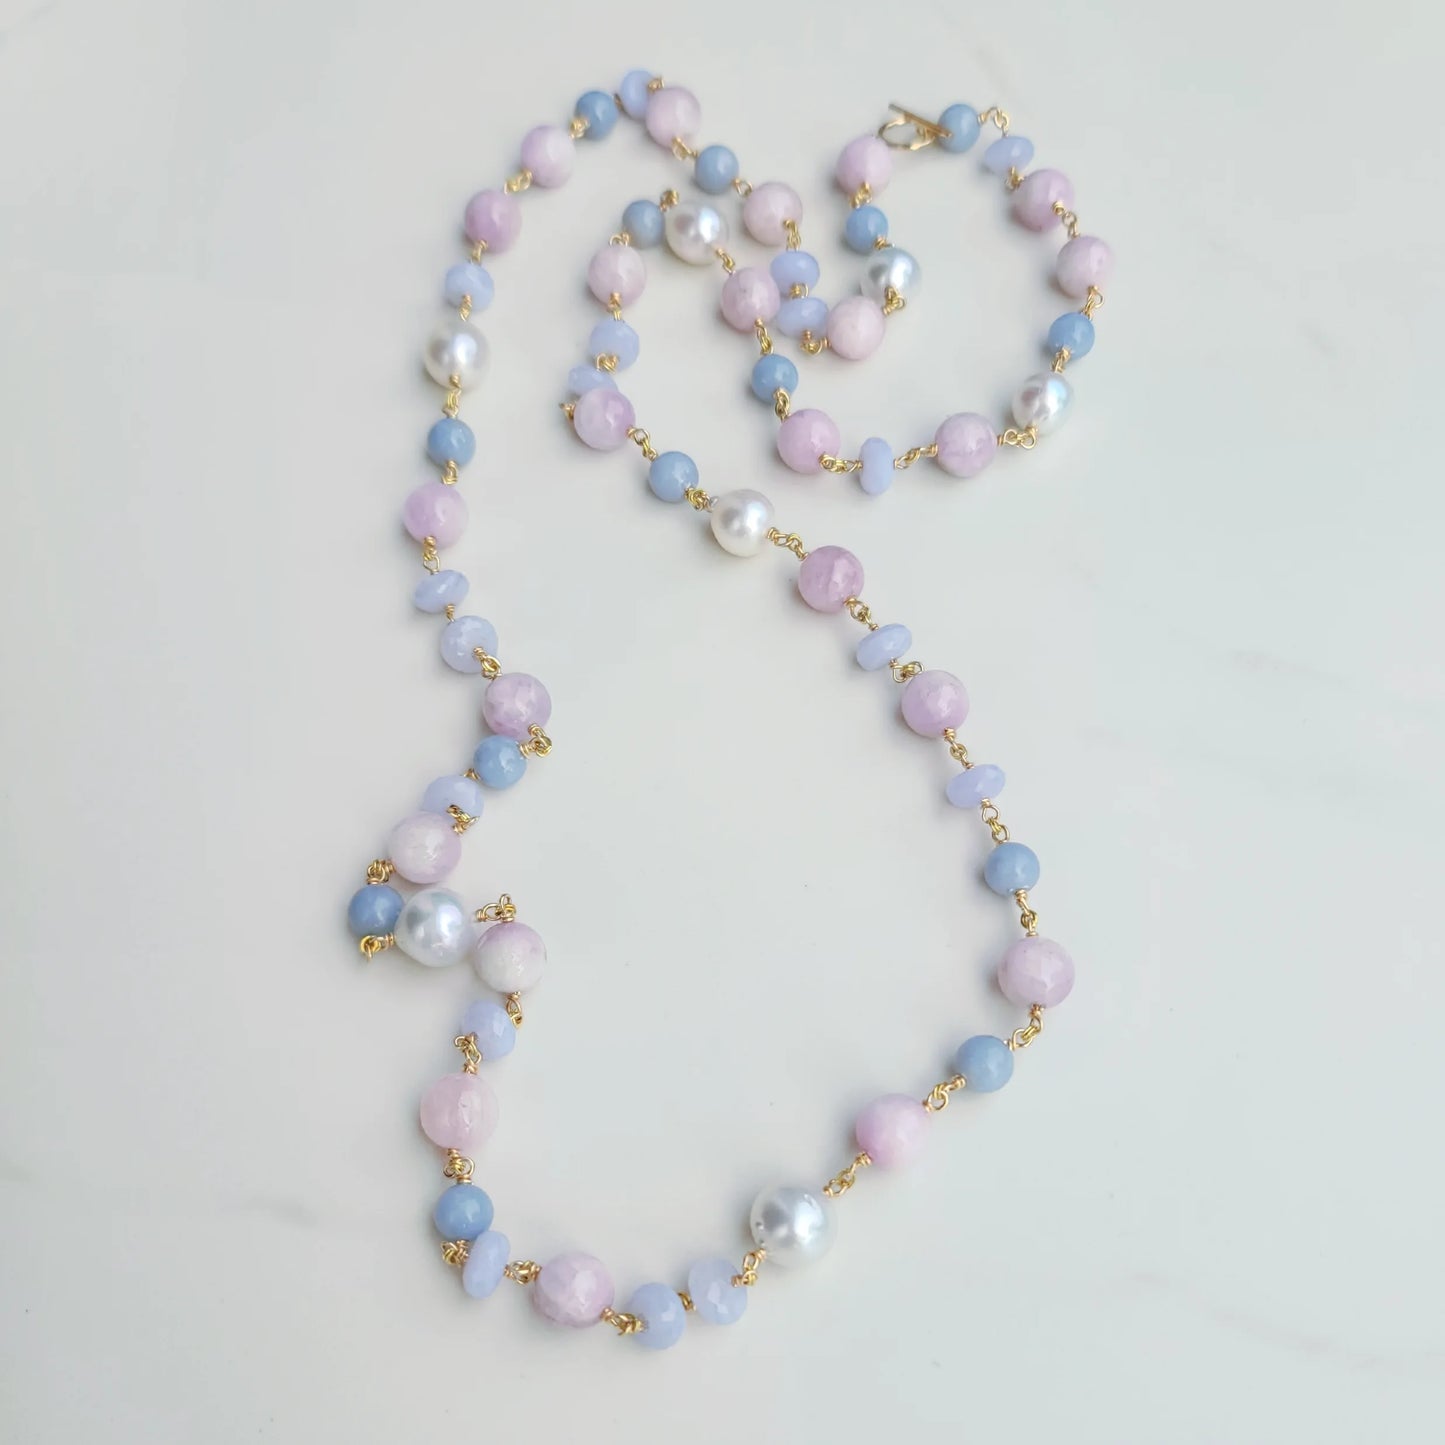 Australian Pearl, Blue Lace Agate, & Kunzite Necklace